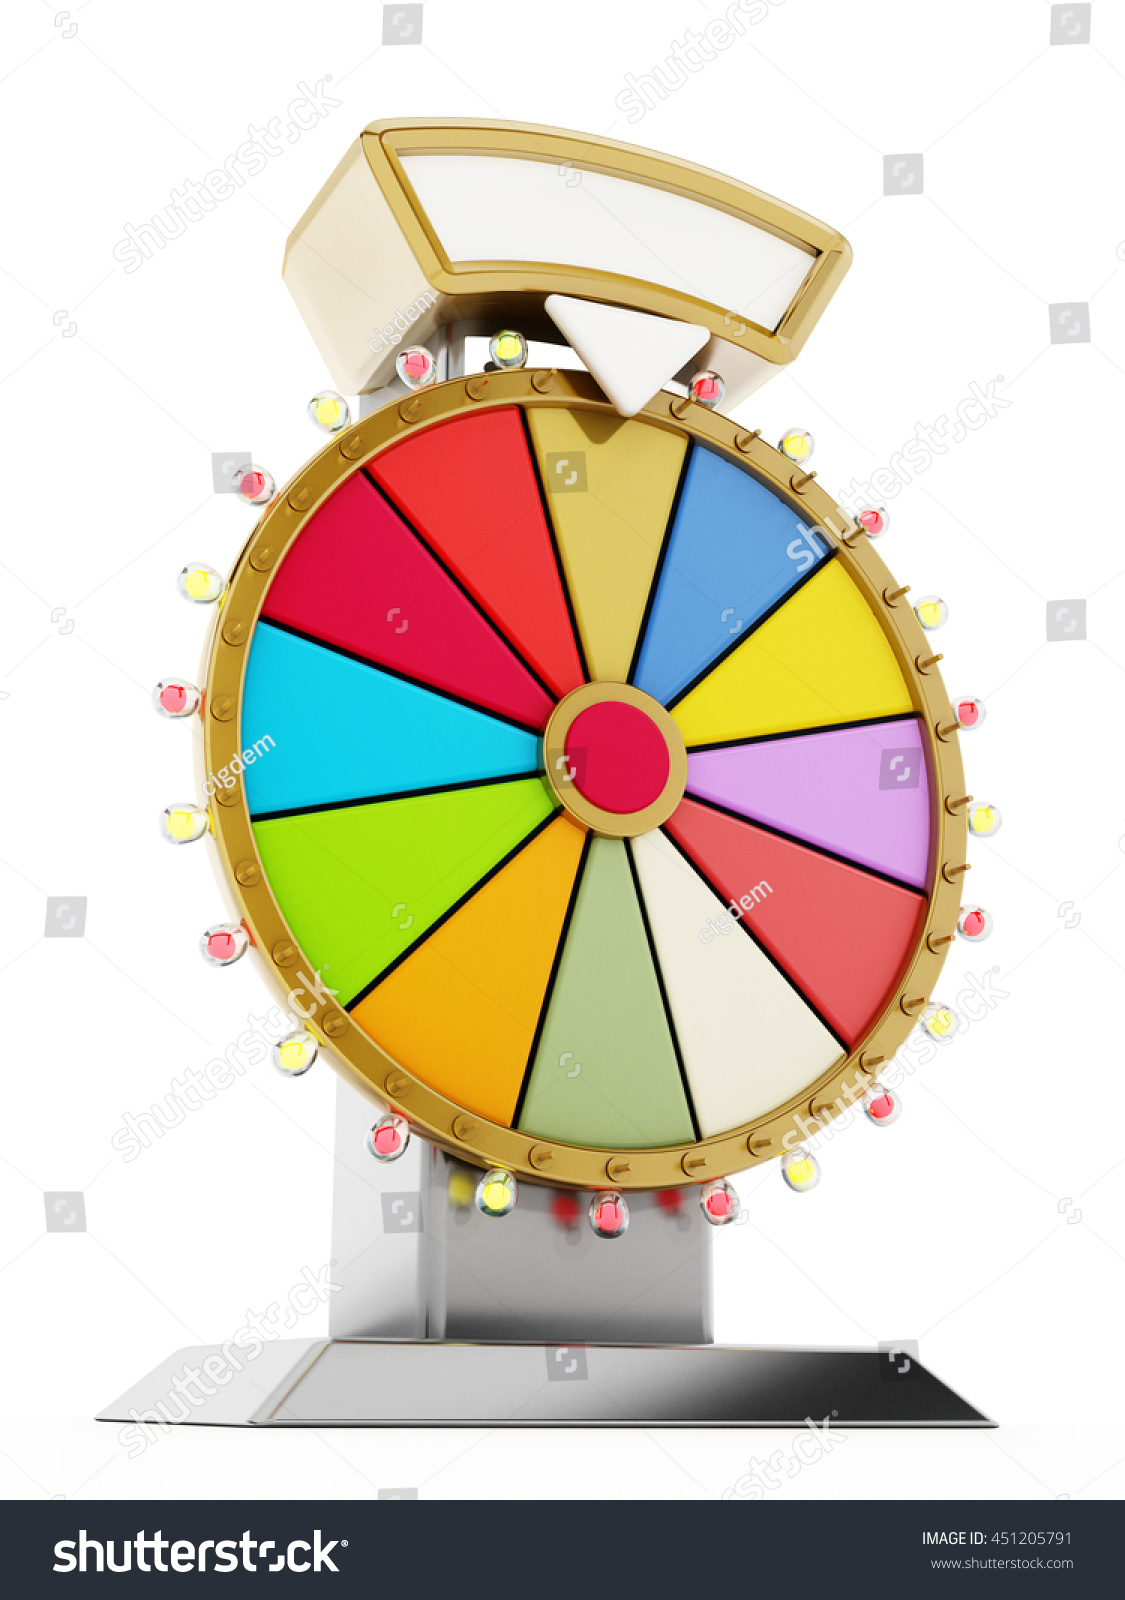 Wheel Fortune Isolated On White Background Stock Illustration 451205791 - Shutterstock1125 x 1600